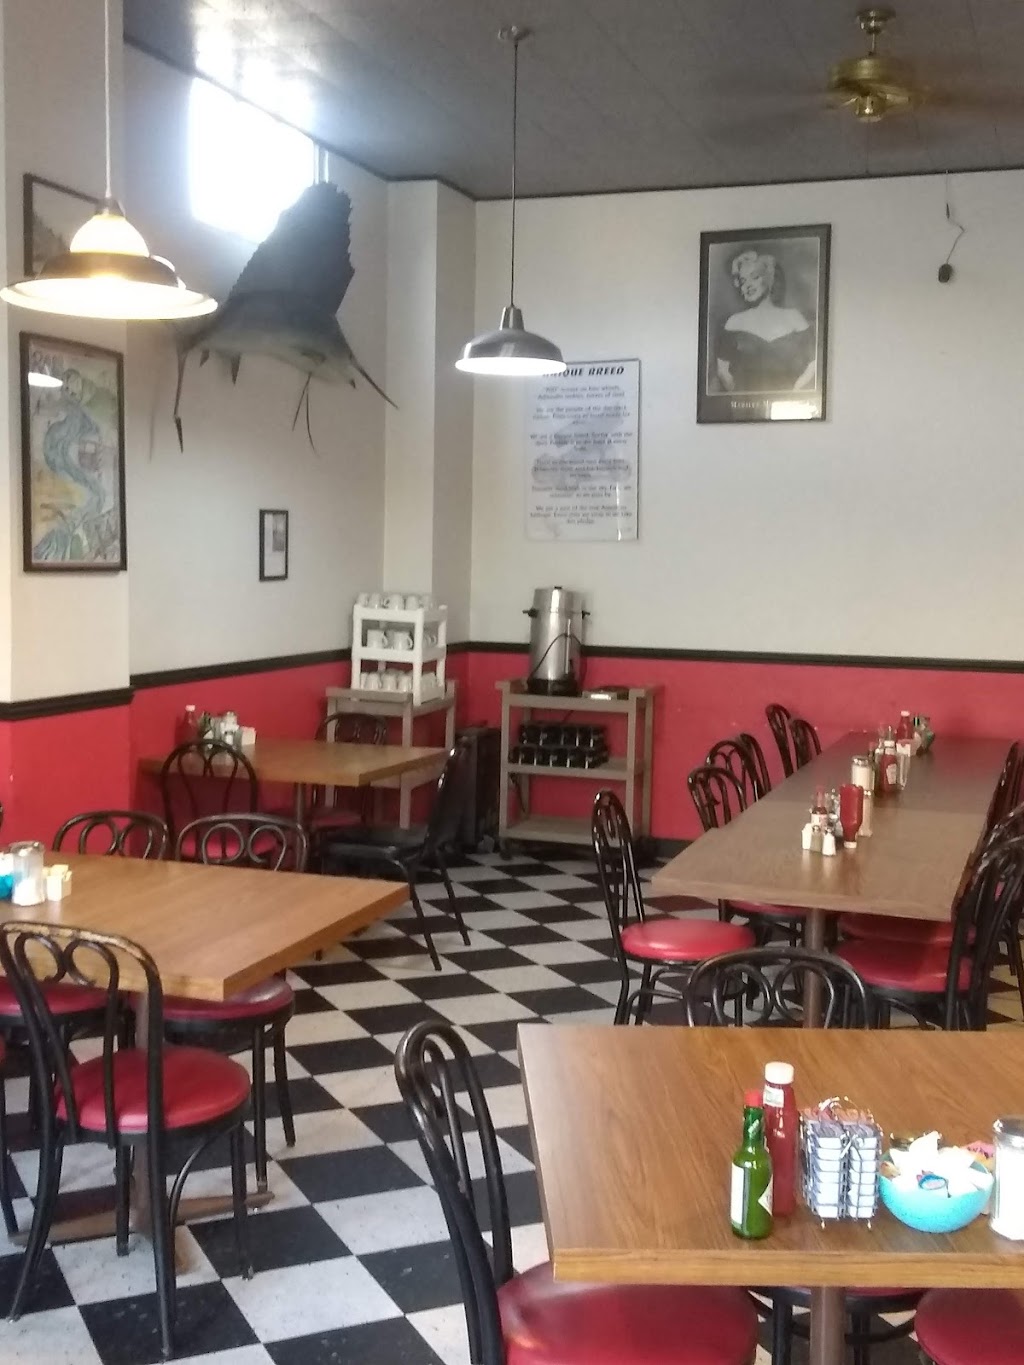 Rauls Striper Cafe | 210 Main St, Rio Vista, CA 94571, USA | Phone: (707) 374-4861